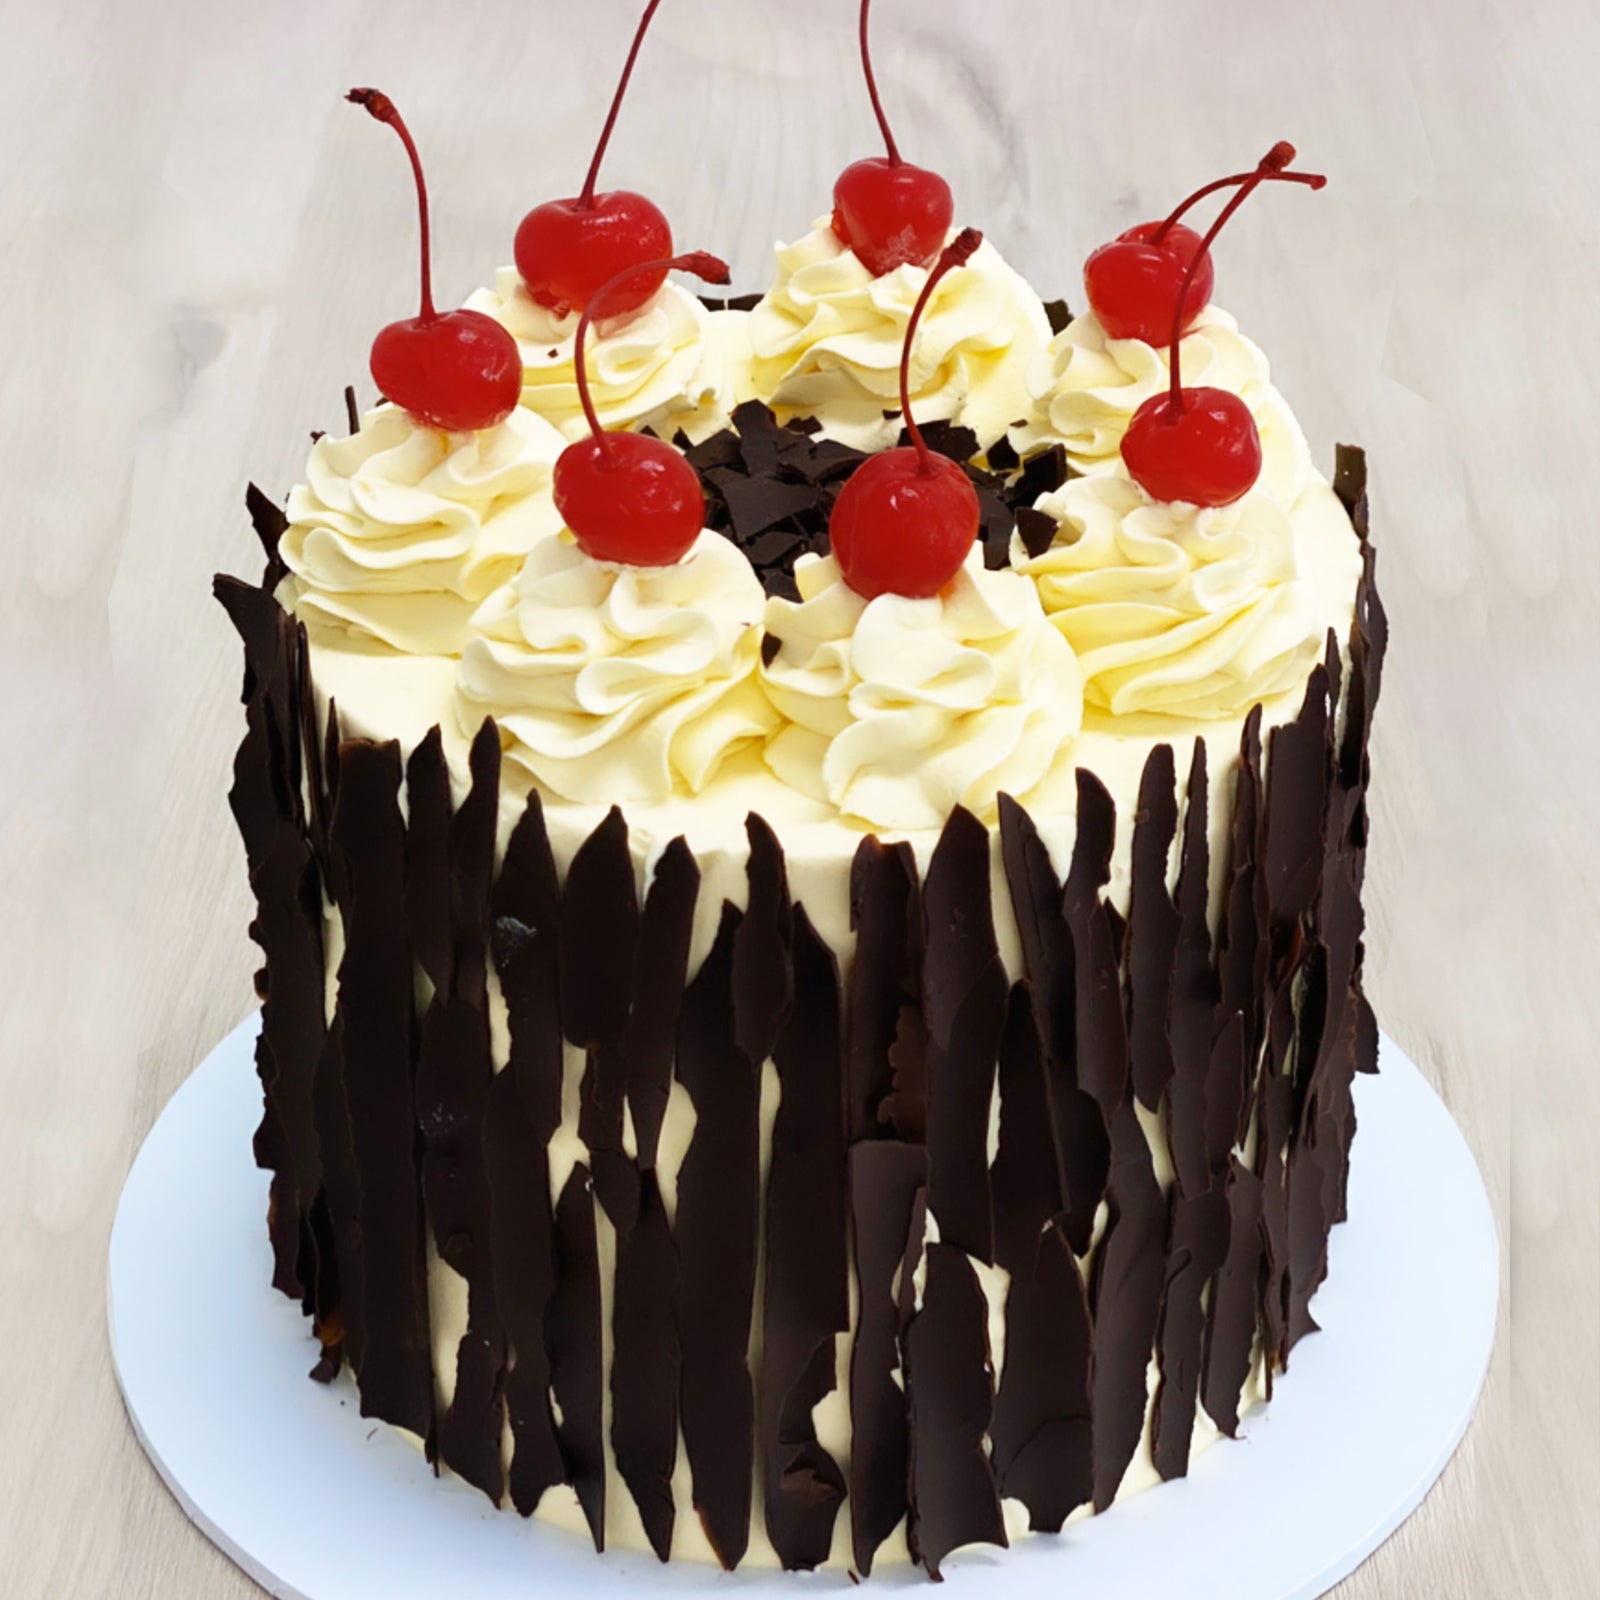 Sending amazing black forest cake to Chennai, Same Day Delivery -  ChennaiOnlineFlorists